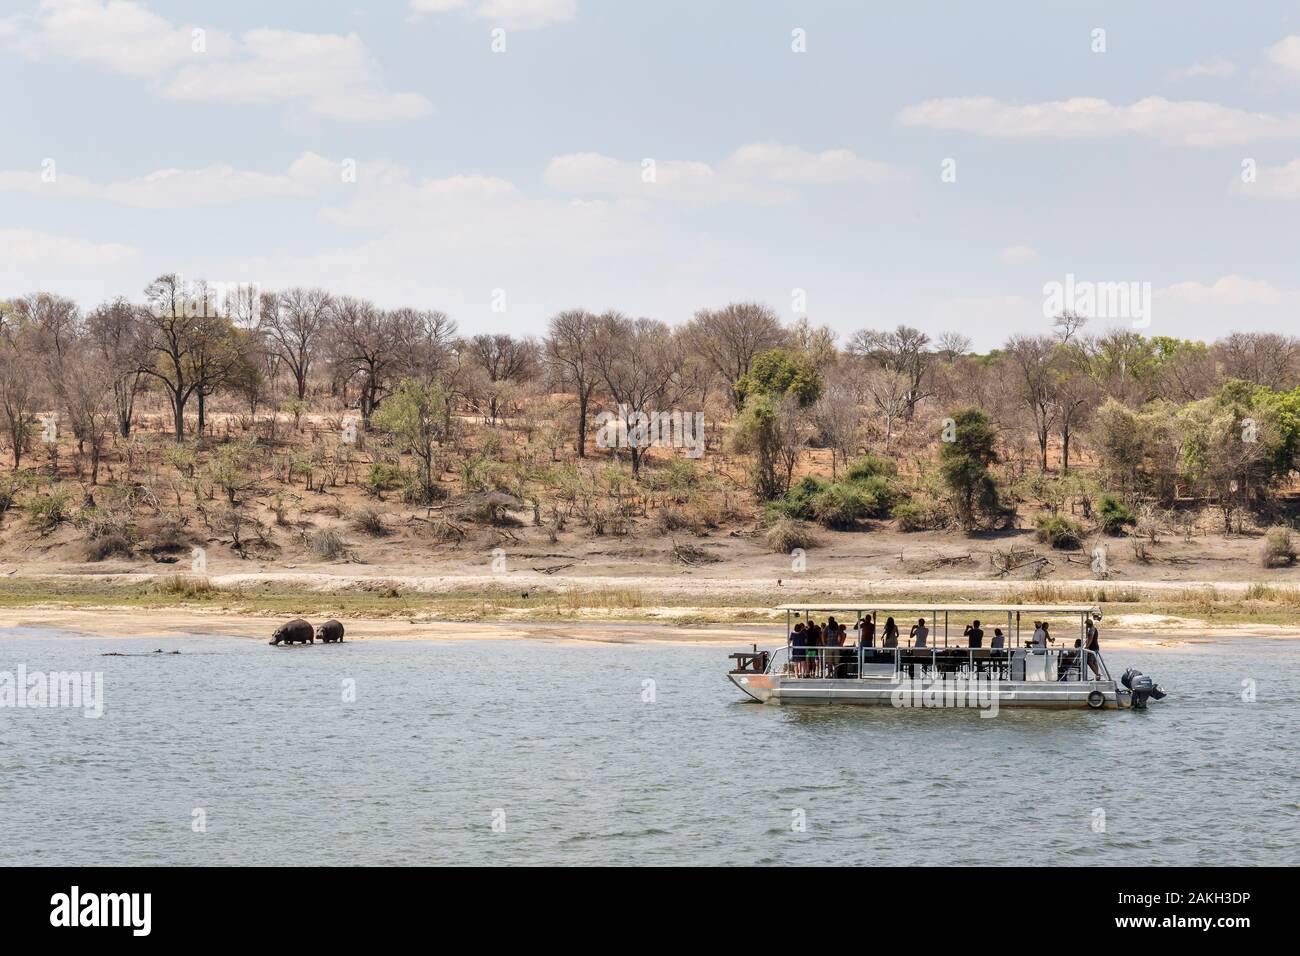 Namibia, Kavango province, Bwabwata National Park, tourists boat on the Okavango river watching hippos Stock Photo